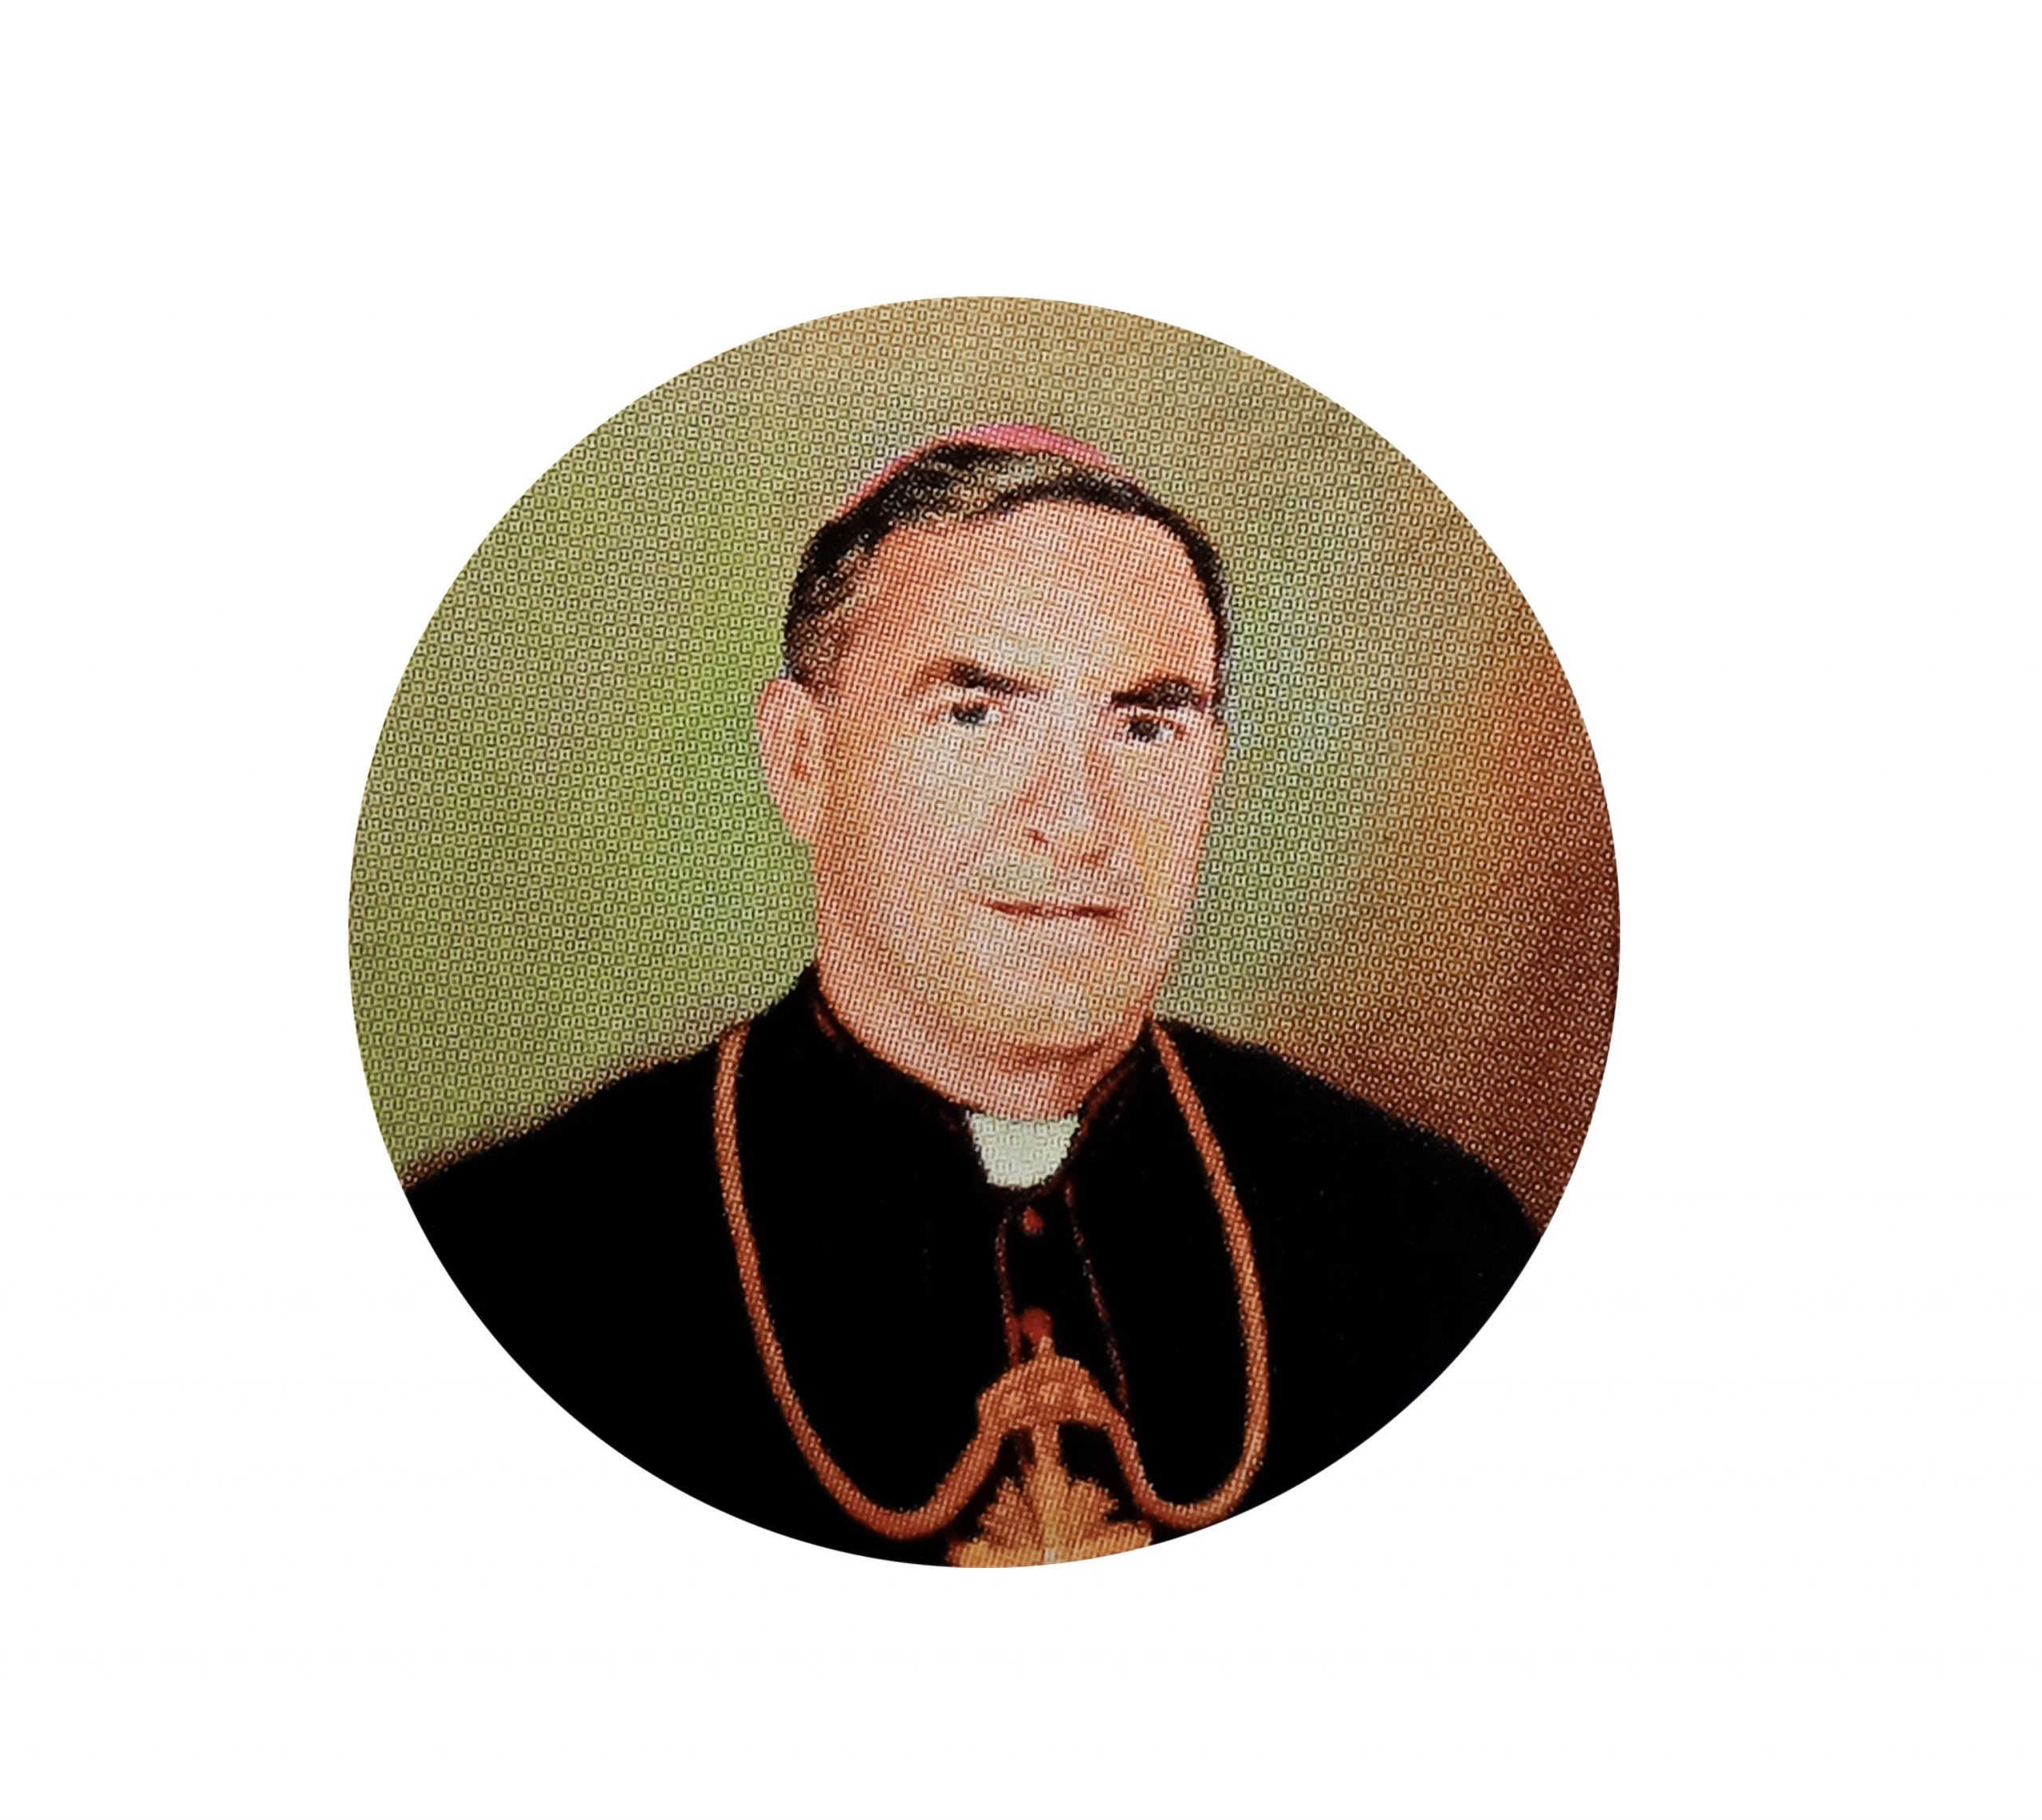 Mons. Jairo Jaramillo Monsalve